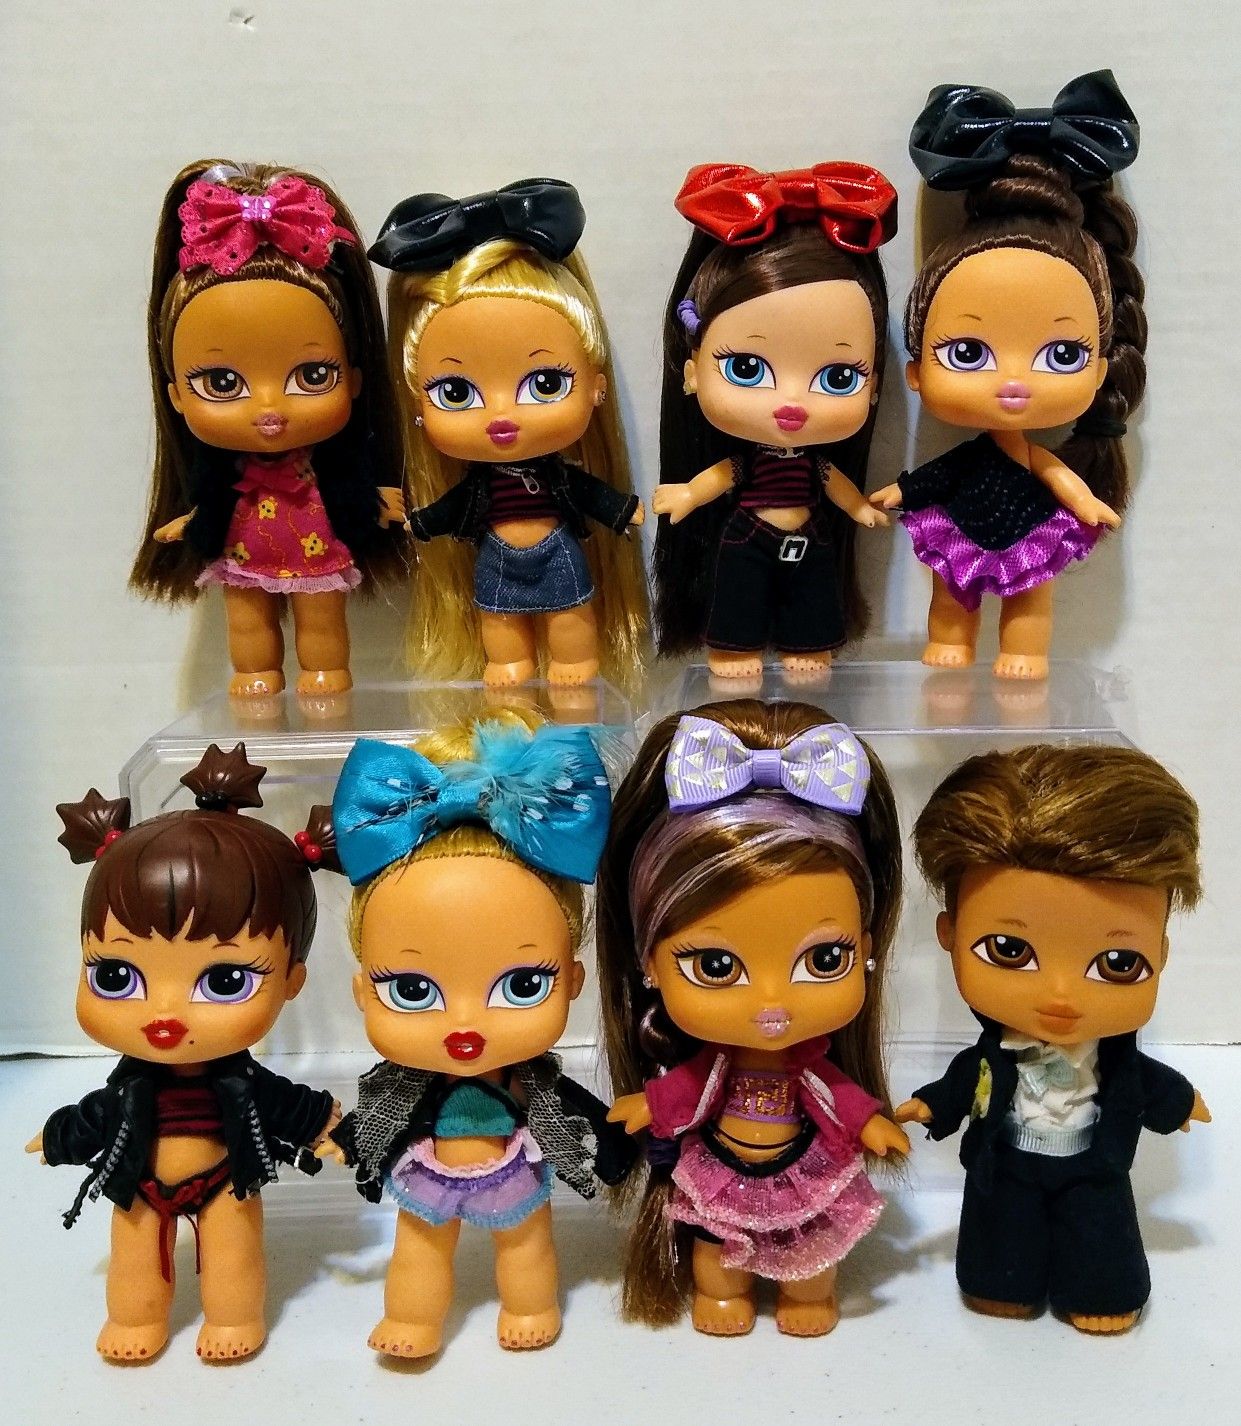 Cute baby Bratz dolls 😍